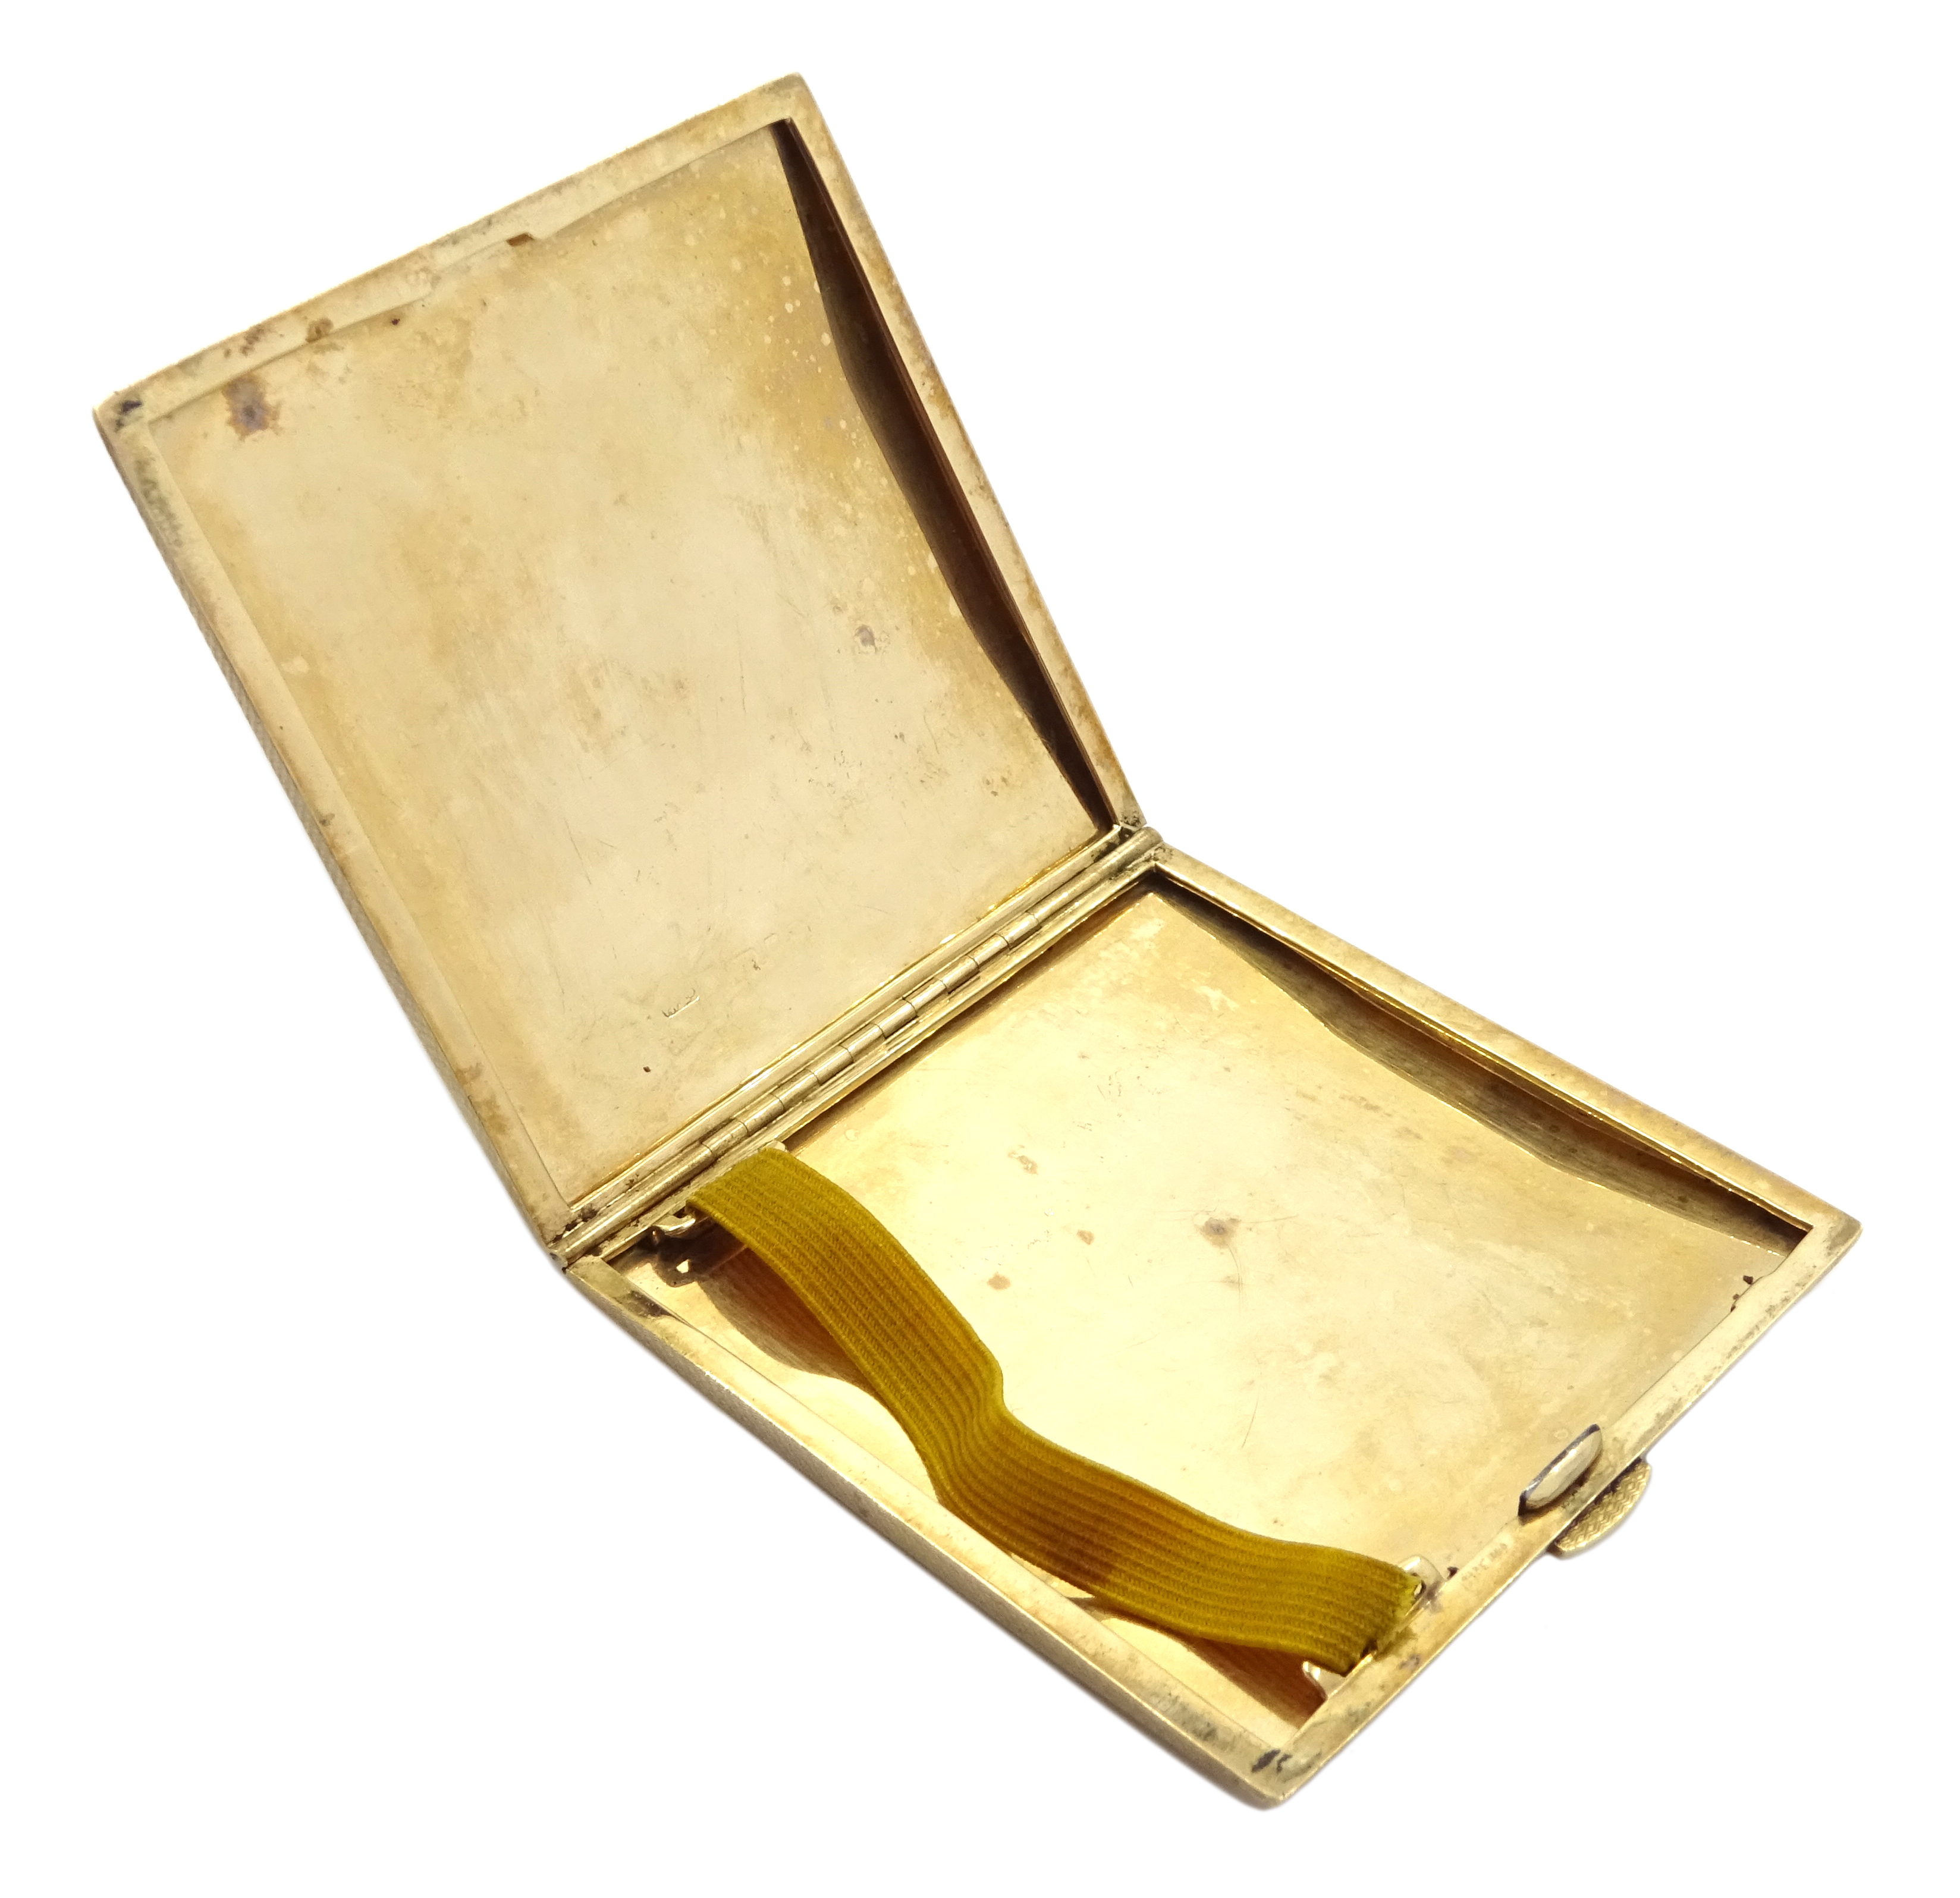 9ct gold cigarette case, engine turned decoration by Payton, Pepper & Sons Ltd, Birmingham 1927 - Image 3 of 3